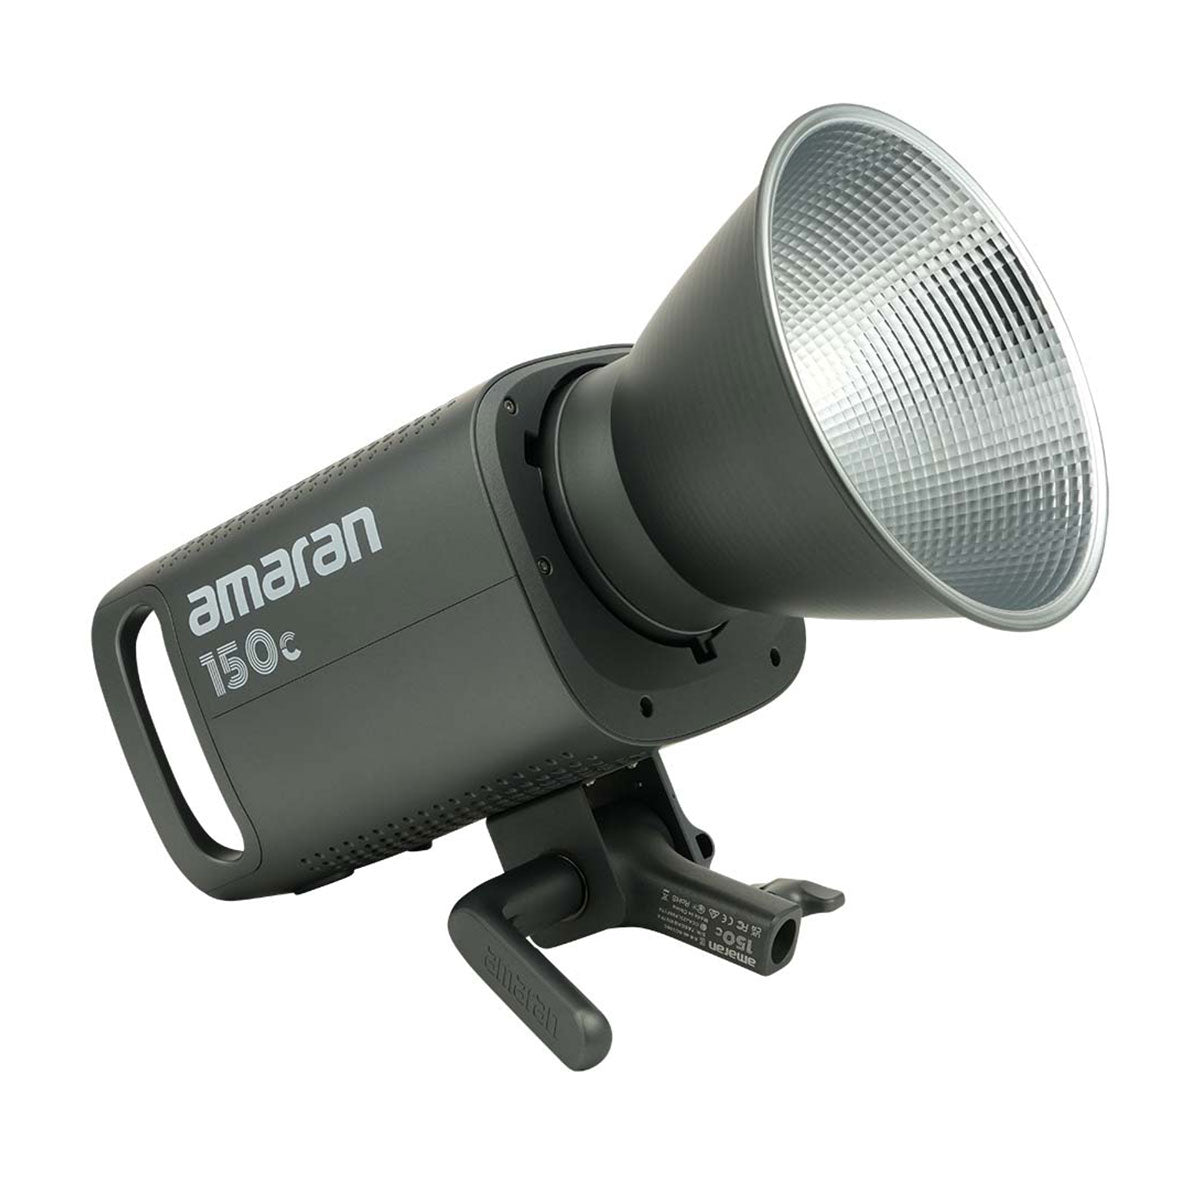 Amaran 150c RGB LED Light